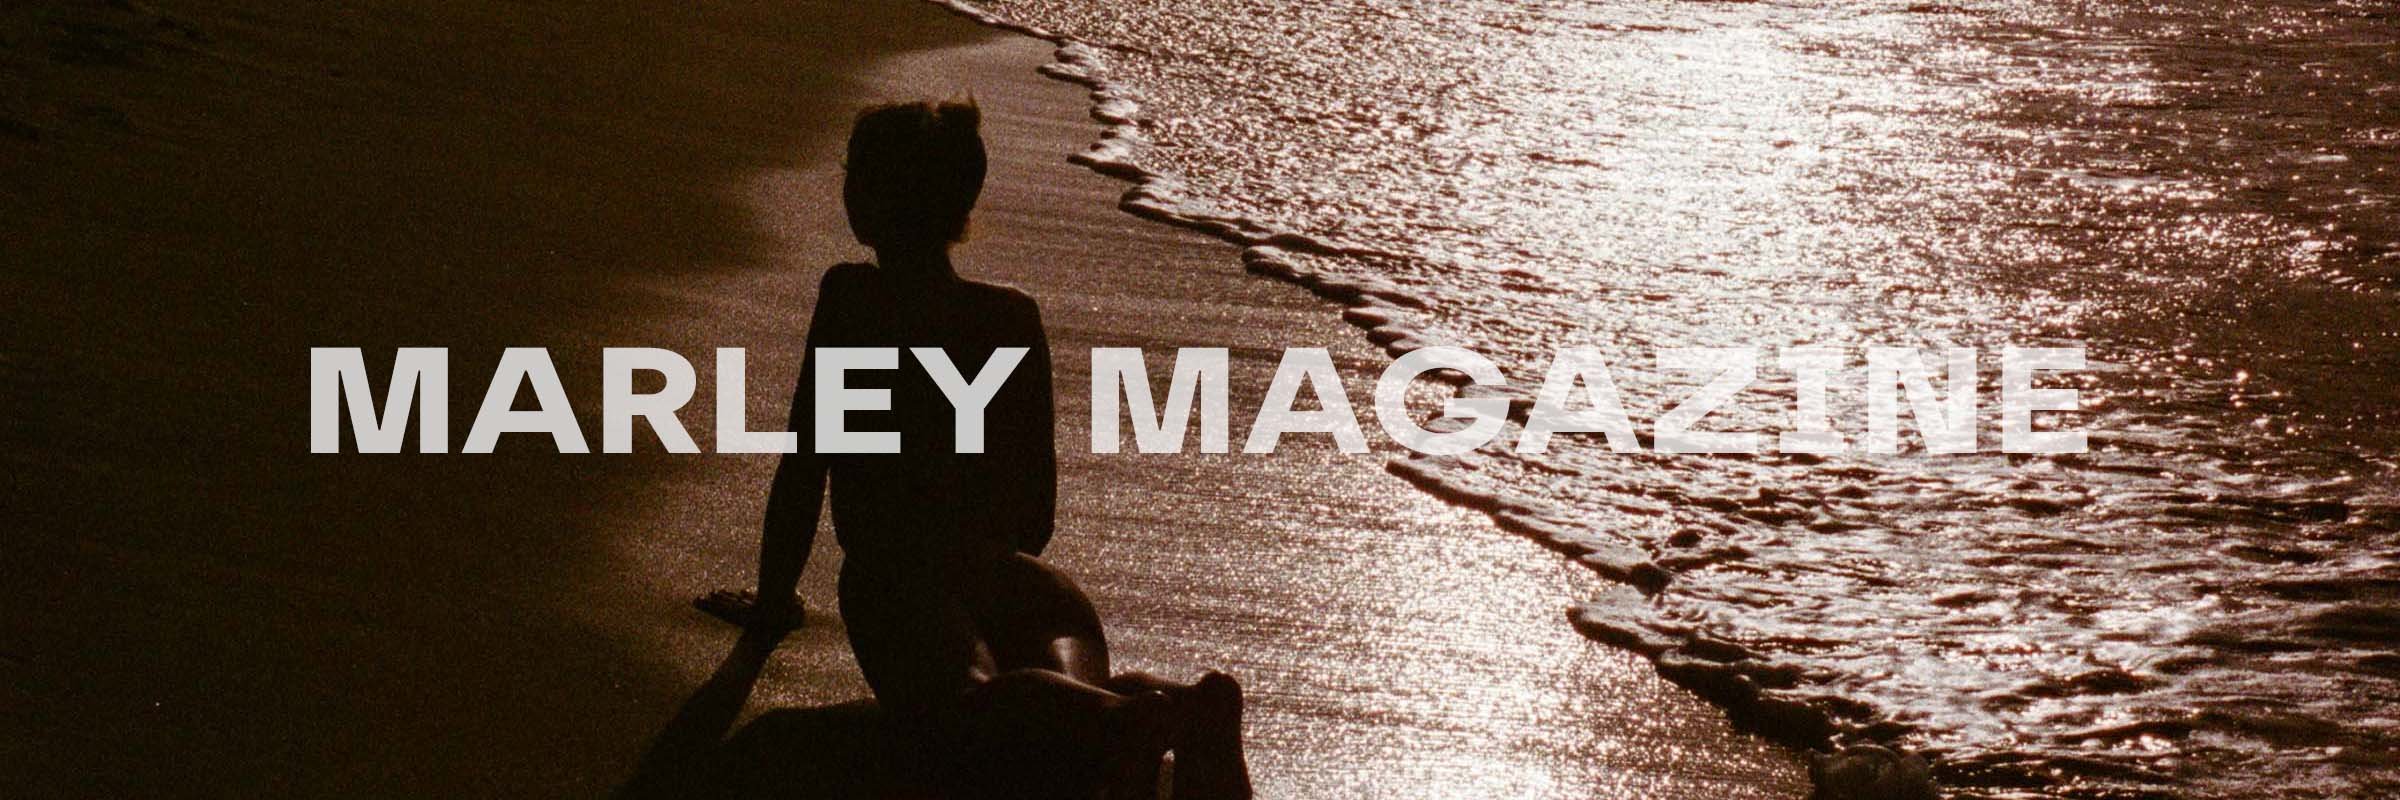 MARLEY Magazine - Banner 1_0004_MARLEY MAGAZINE.jpg